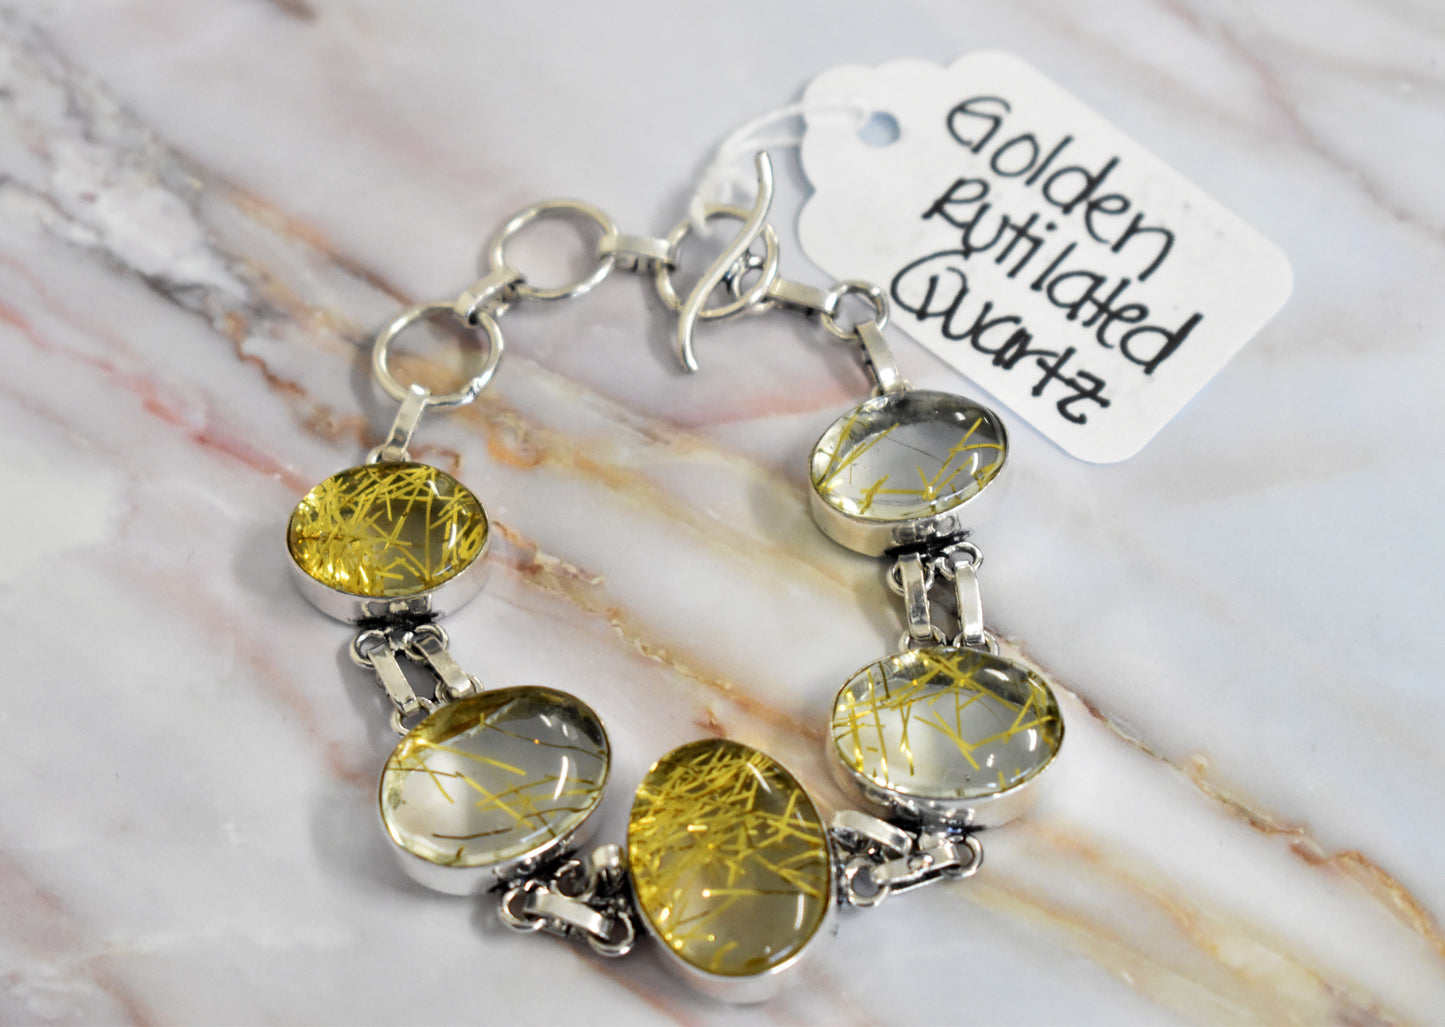 stones-of-transformation - Golden Rutilated Quartz Bracelet - Stones of Transformation - 